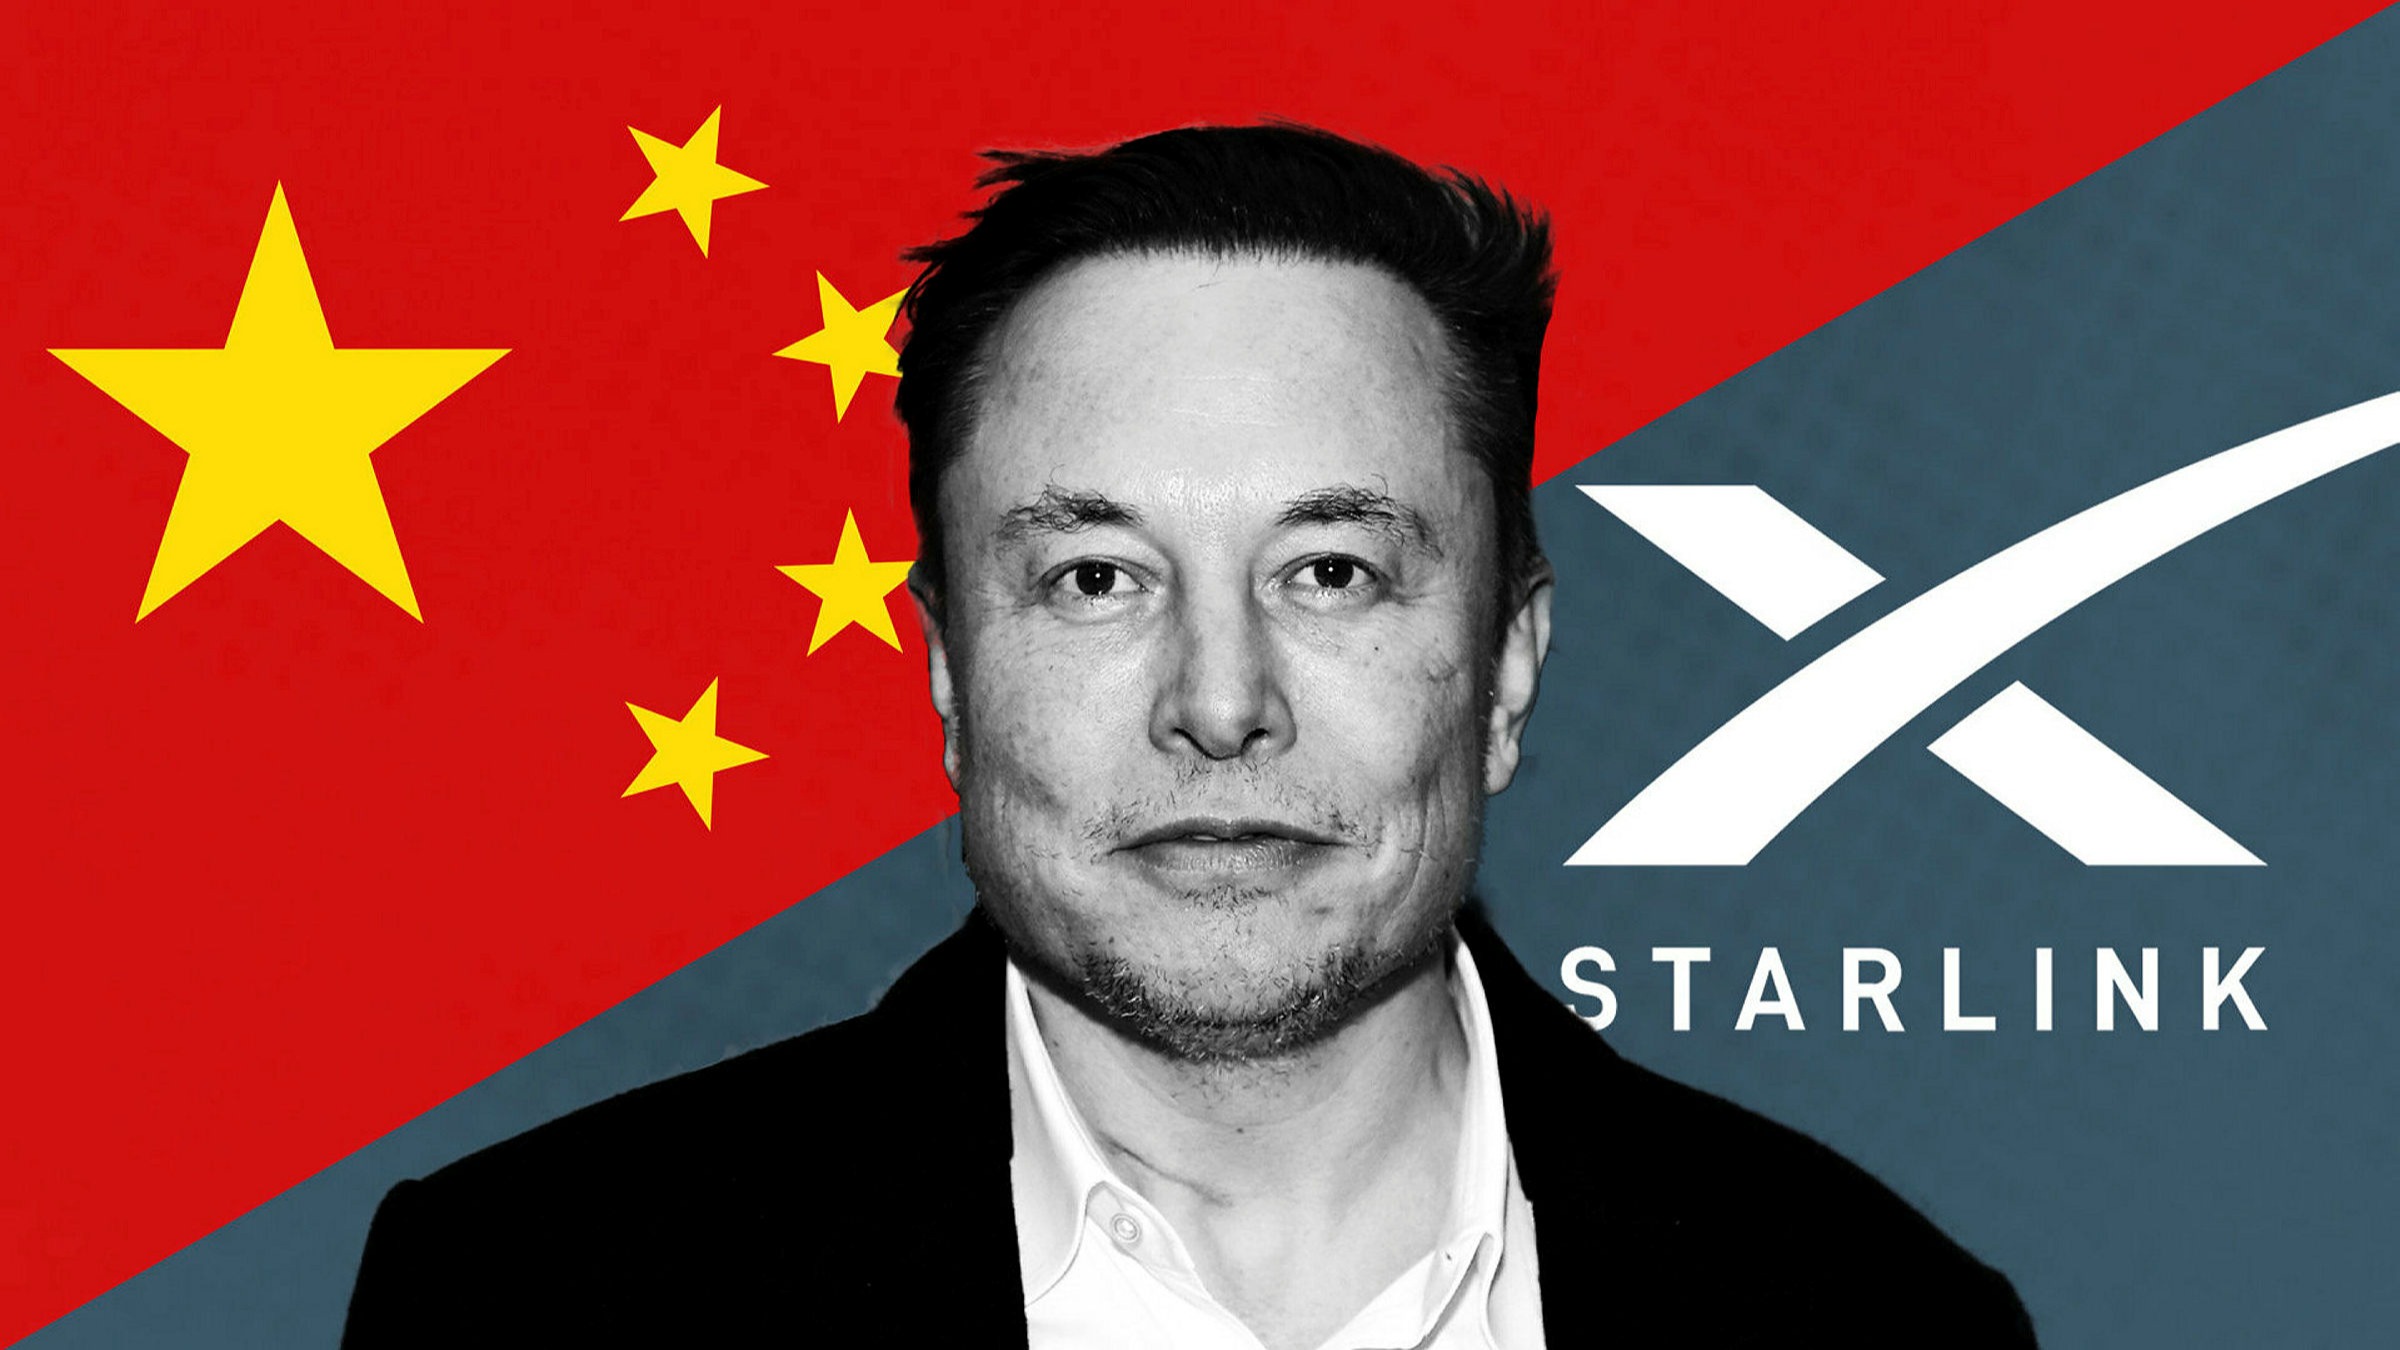 Elon Musk and Star link